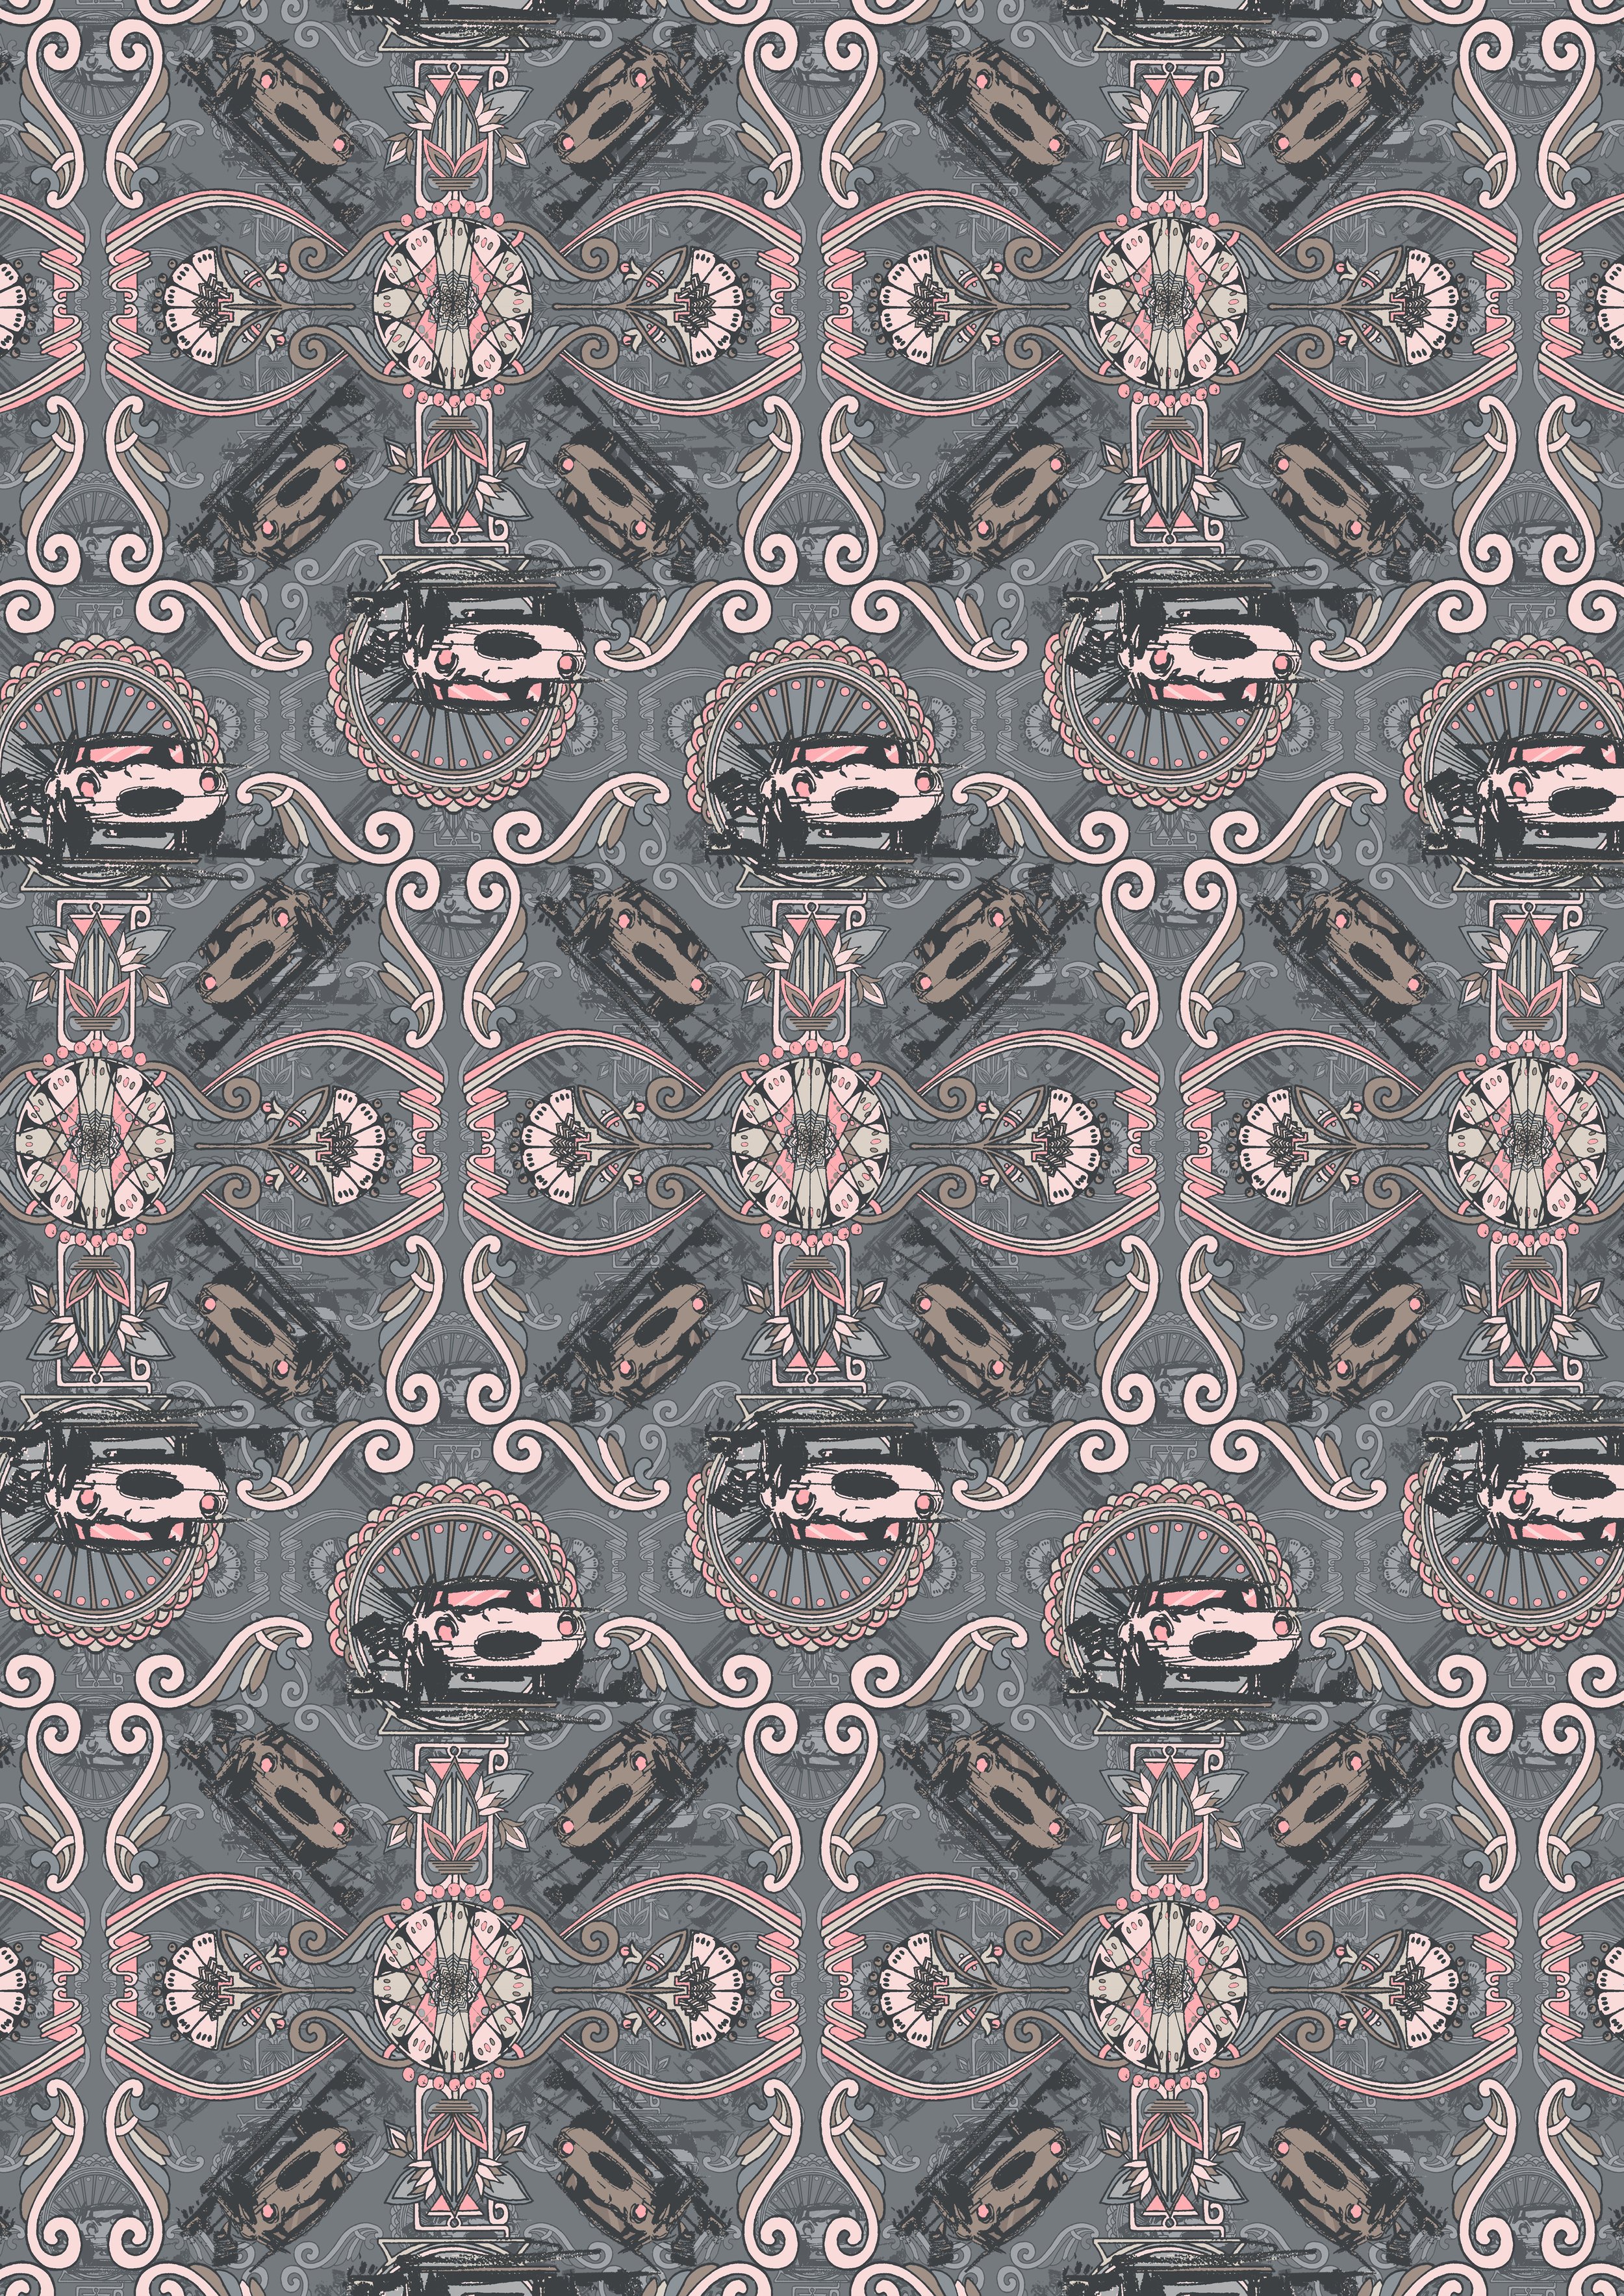 18 08 jaguar motif colour grey and pink 2.jpg